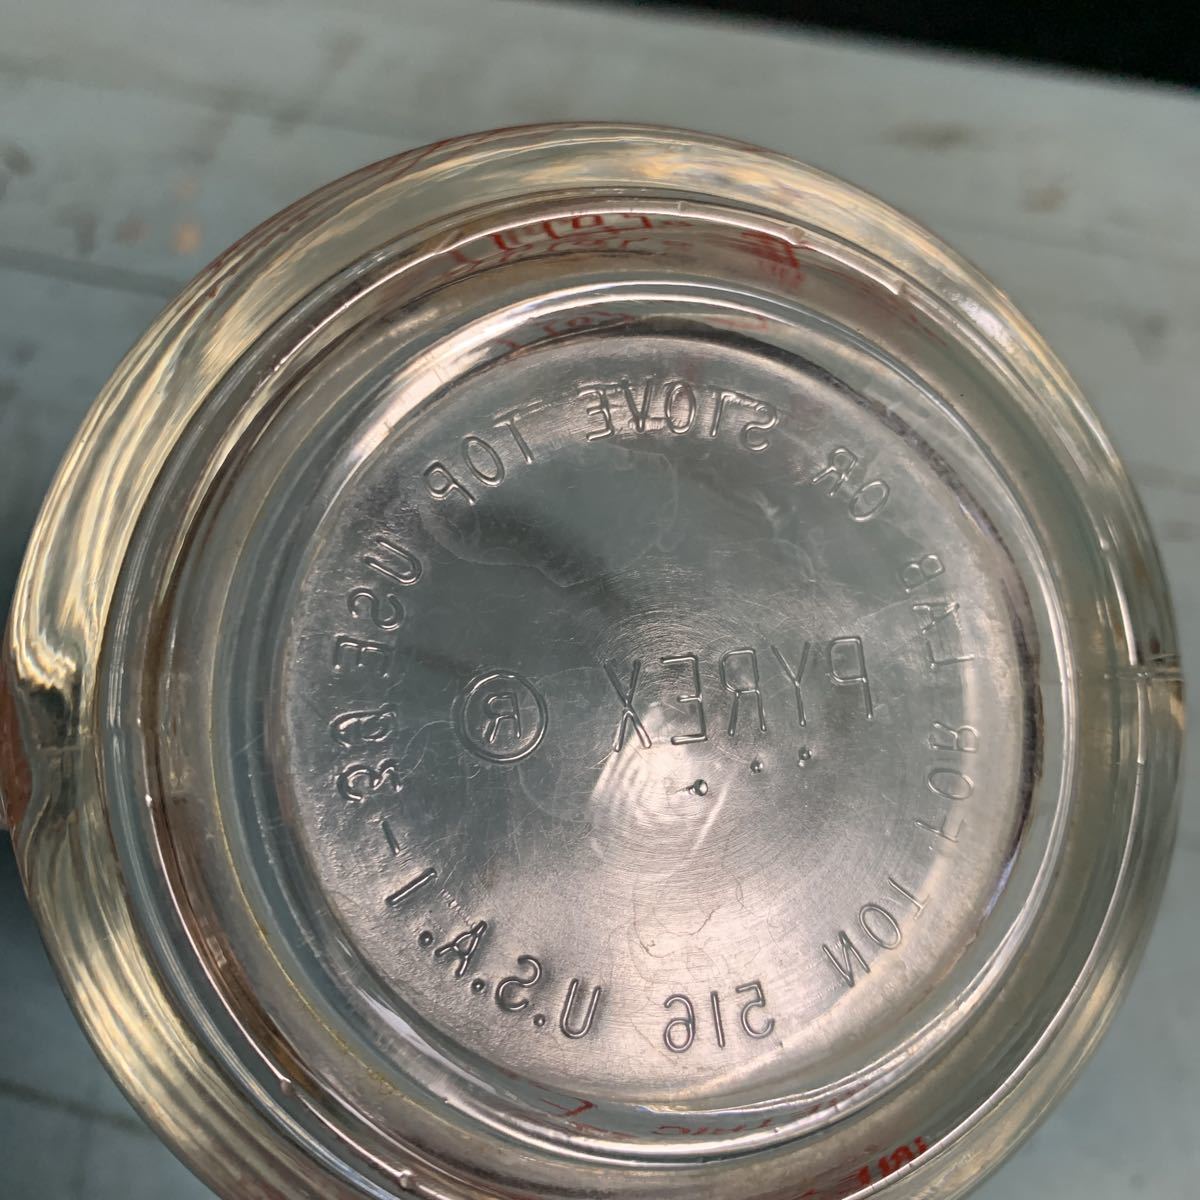 PYREX 計量カップ メジャーカップ ガラス 取っ手付き パイレックス 耐熱ガラス製 キッチン用品 (8285)_画像7